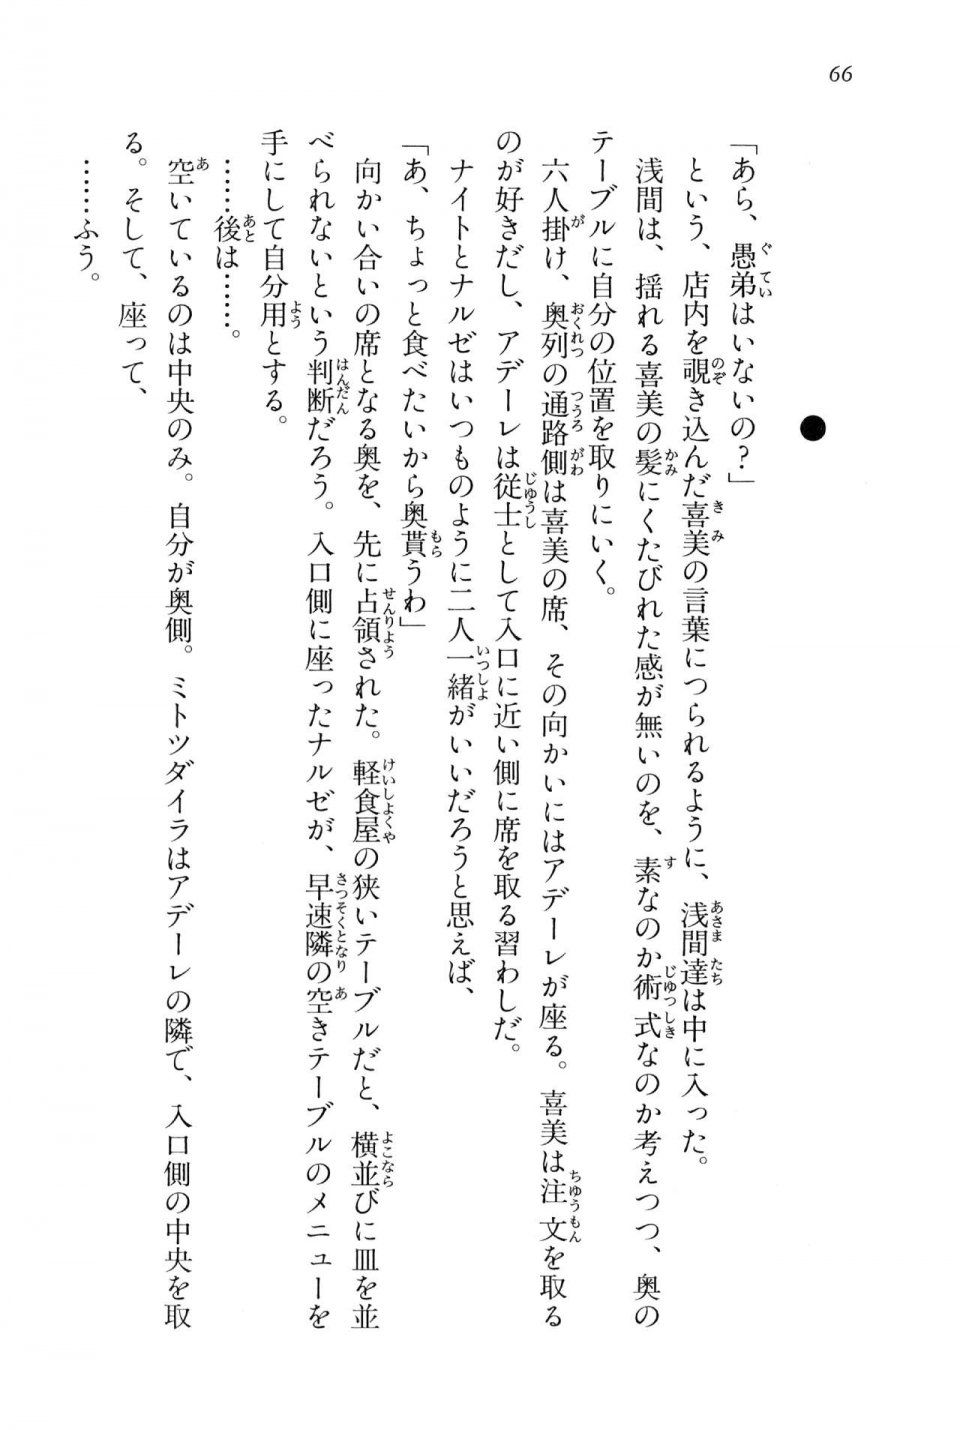 Kyoukai Senjou no Horizon BD Special Mininovel Vol 4(2B) - Photo #70